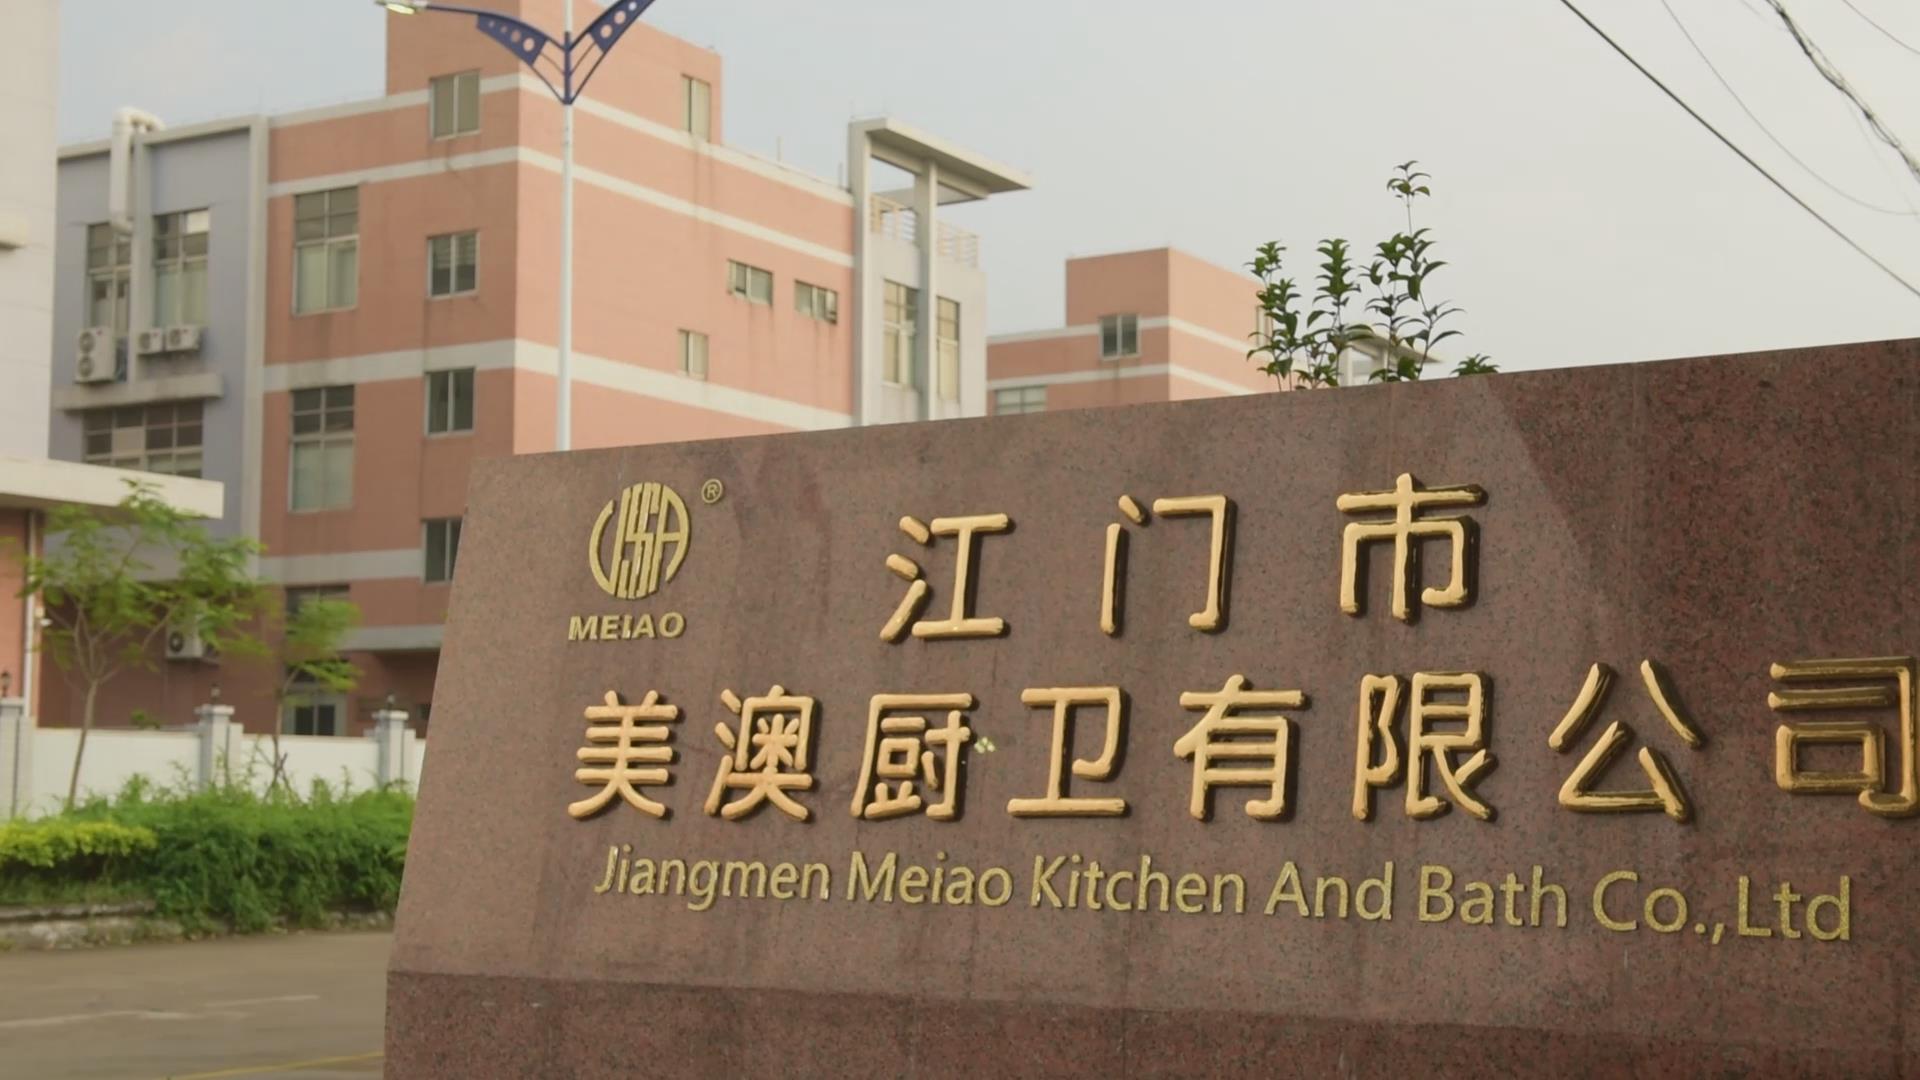  Jiangmen MEIAO Kitchen  And Bathroom Co., Ltd.